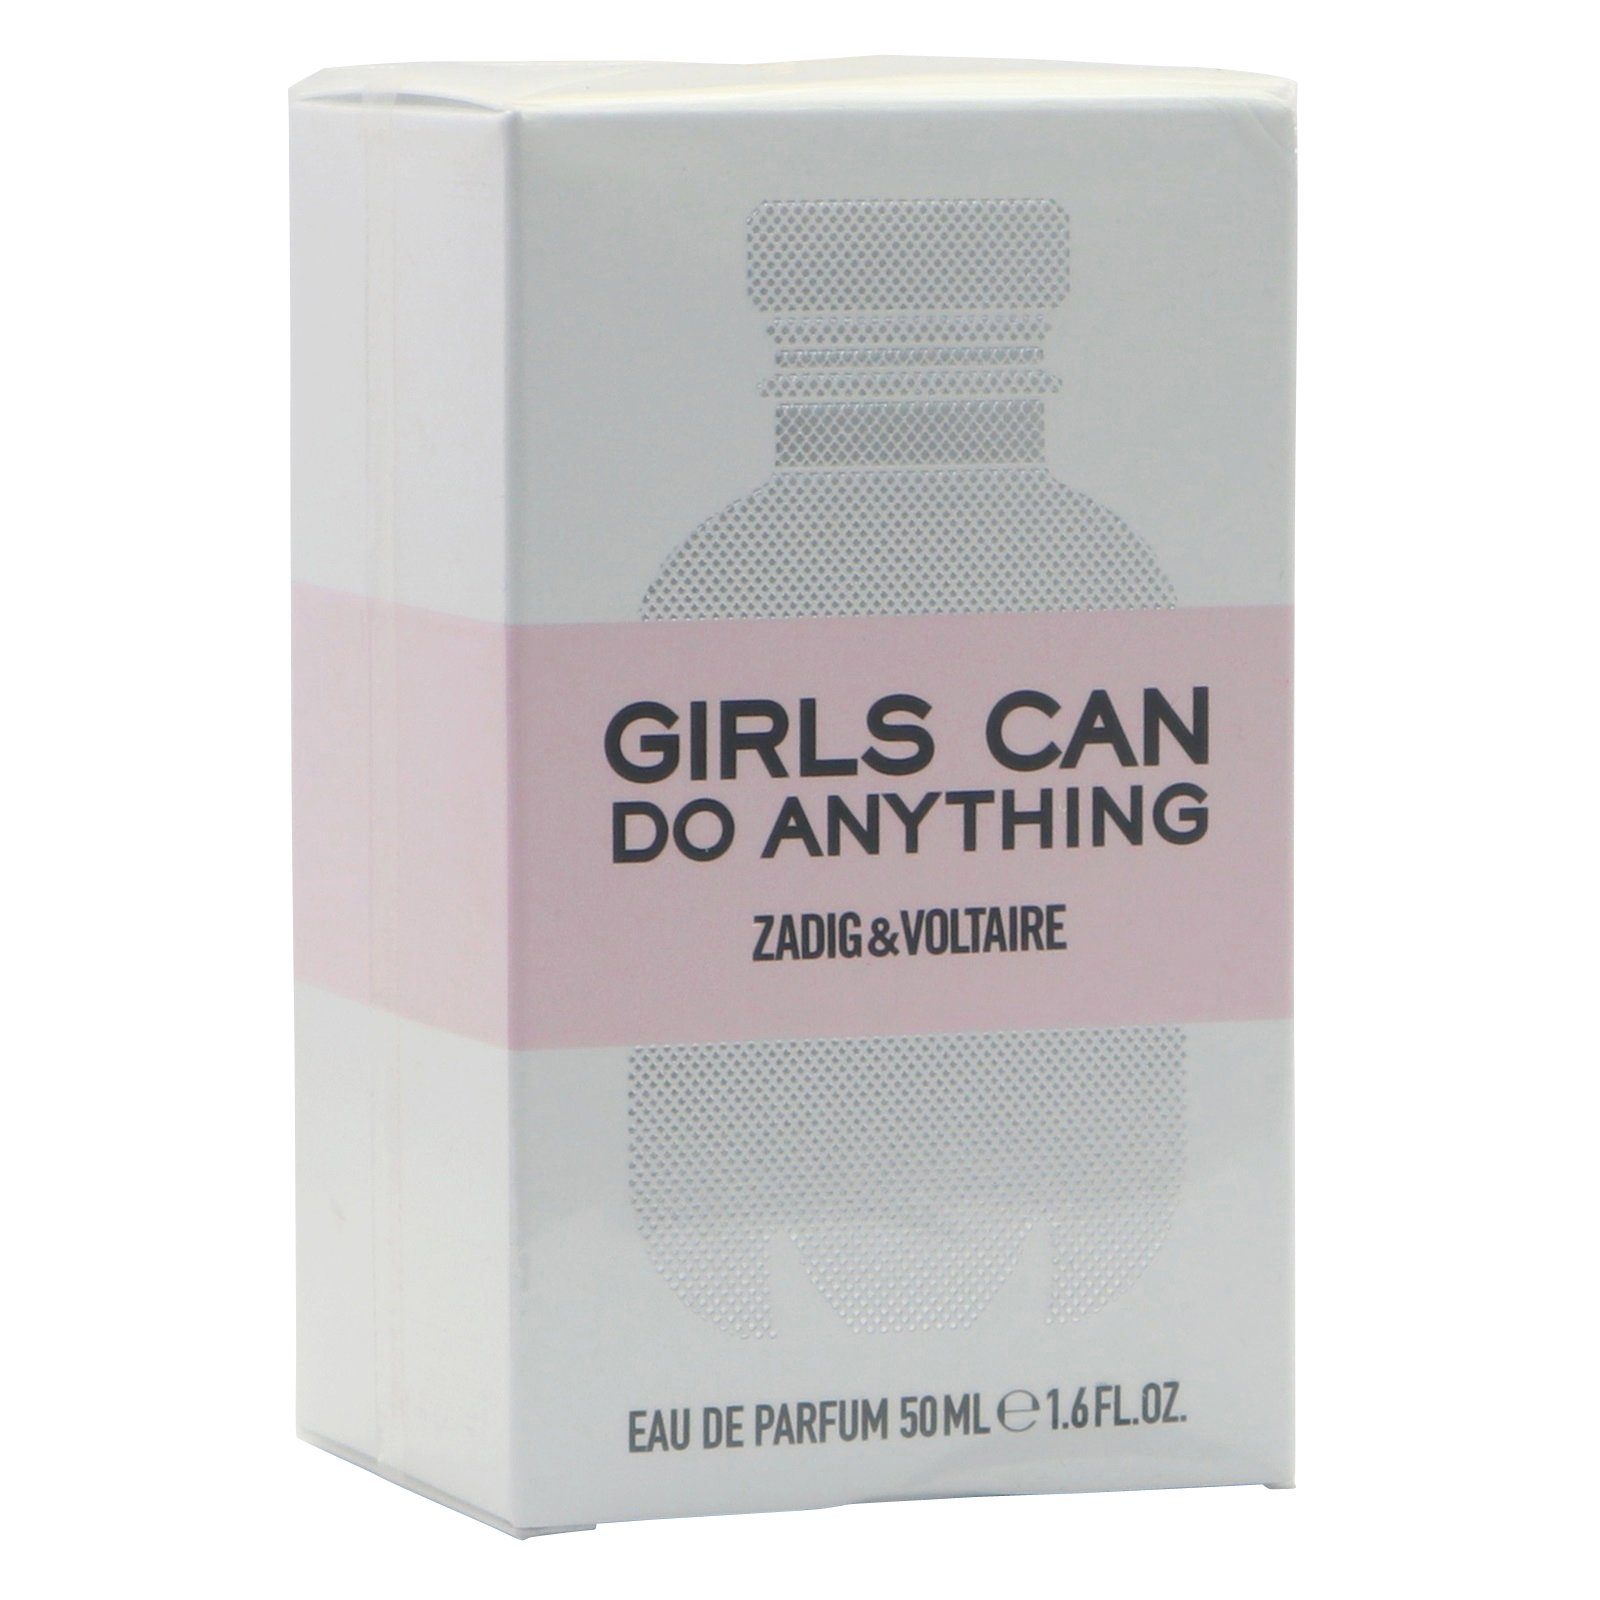 ZADIG & Can Eau Parfum Do Girls de VOLTAIRE Anything